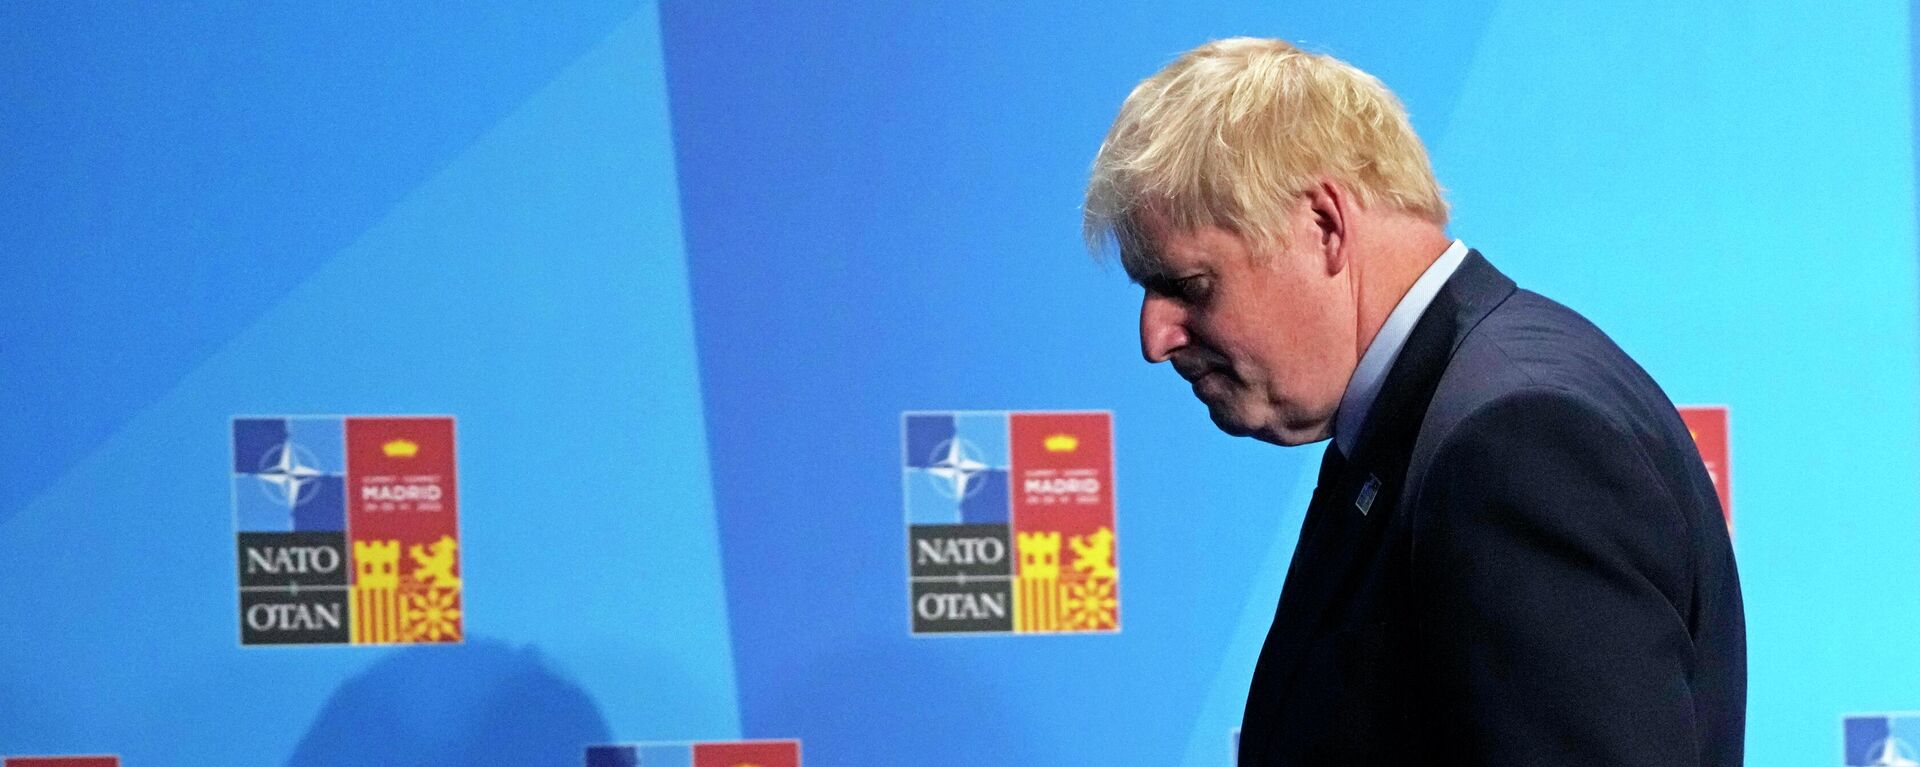 British Prime Minister Boris Johnson steps off the podium after addressing a media conference at a NATO summit in Madrid, Spain on Thursday, June 30, 2022 - Sputnik International, 1920, 28.07.2022